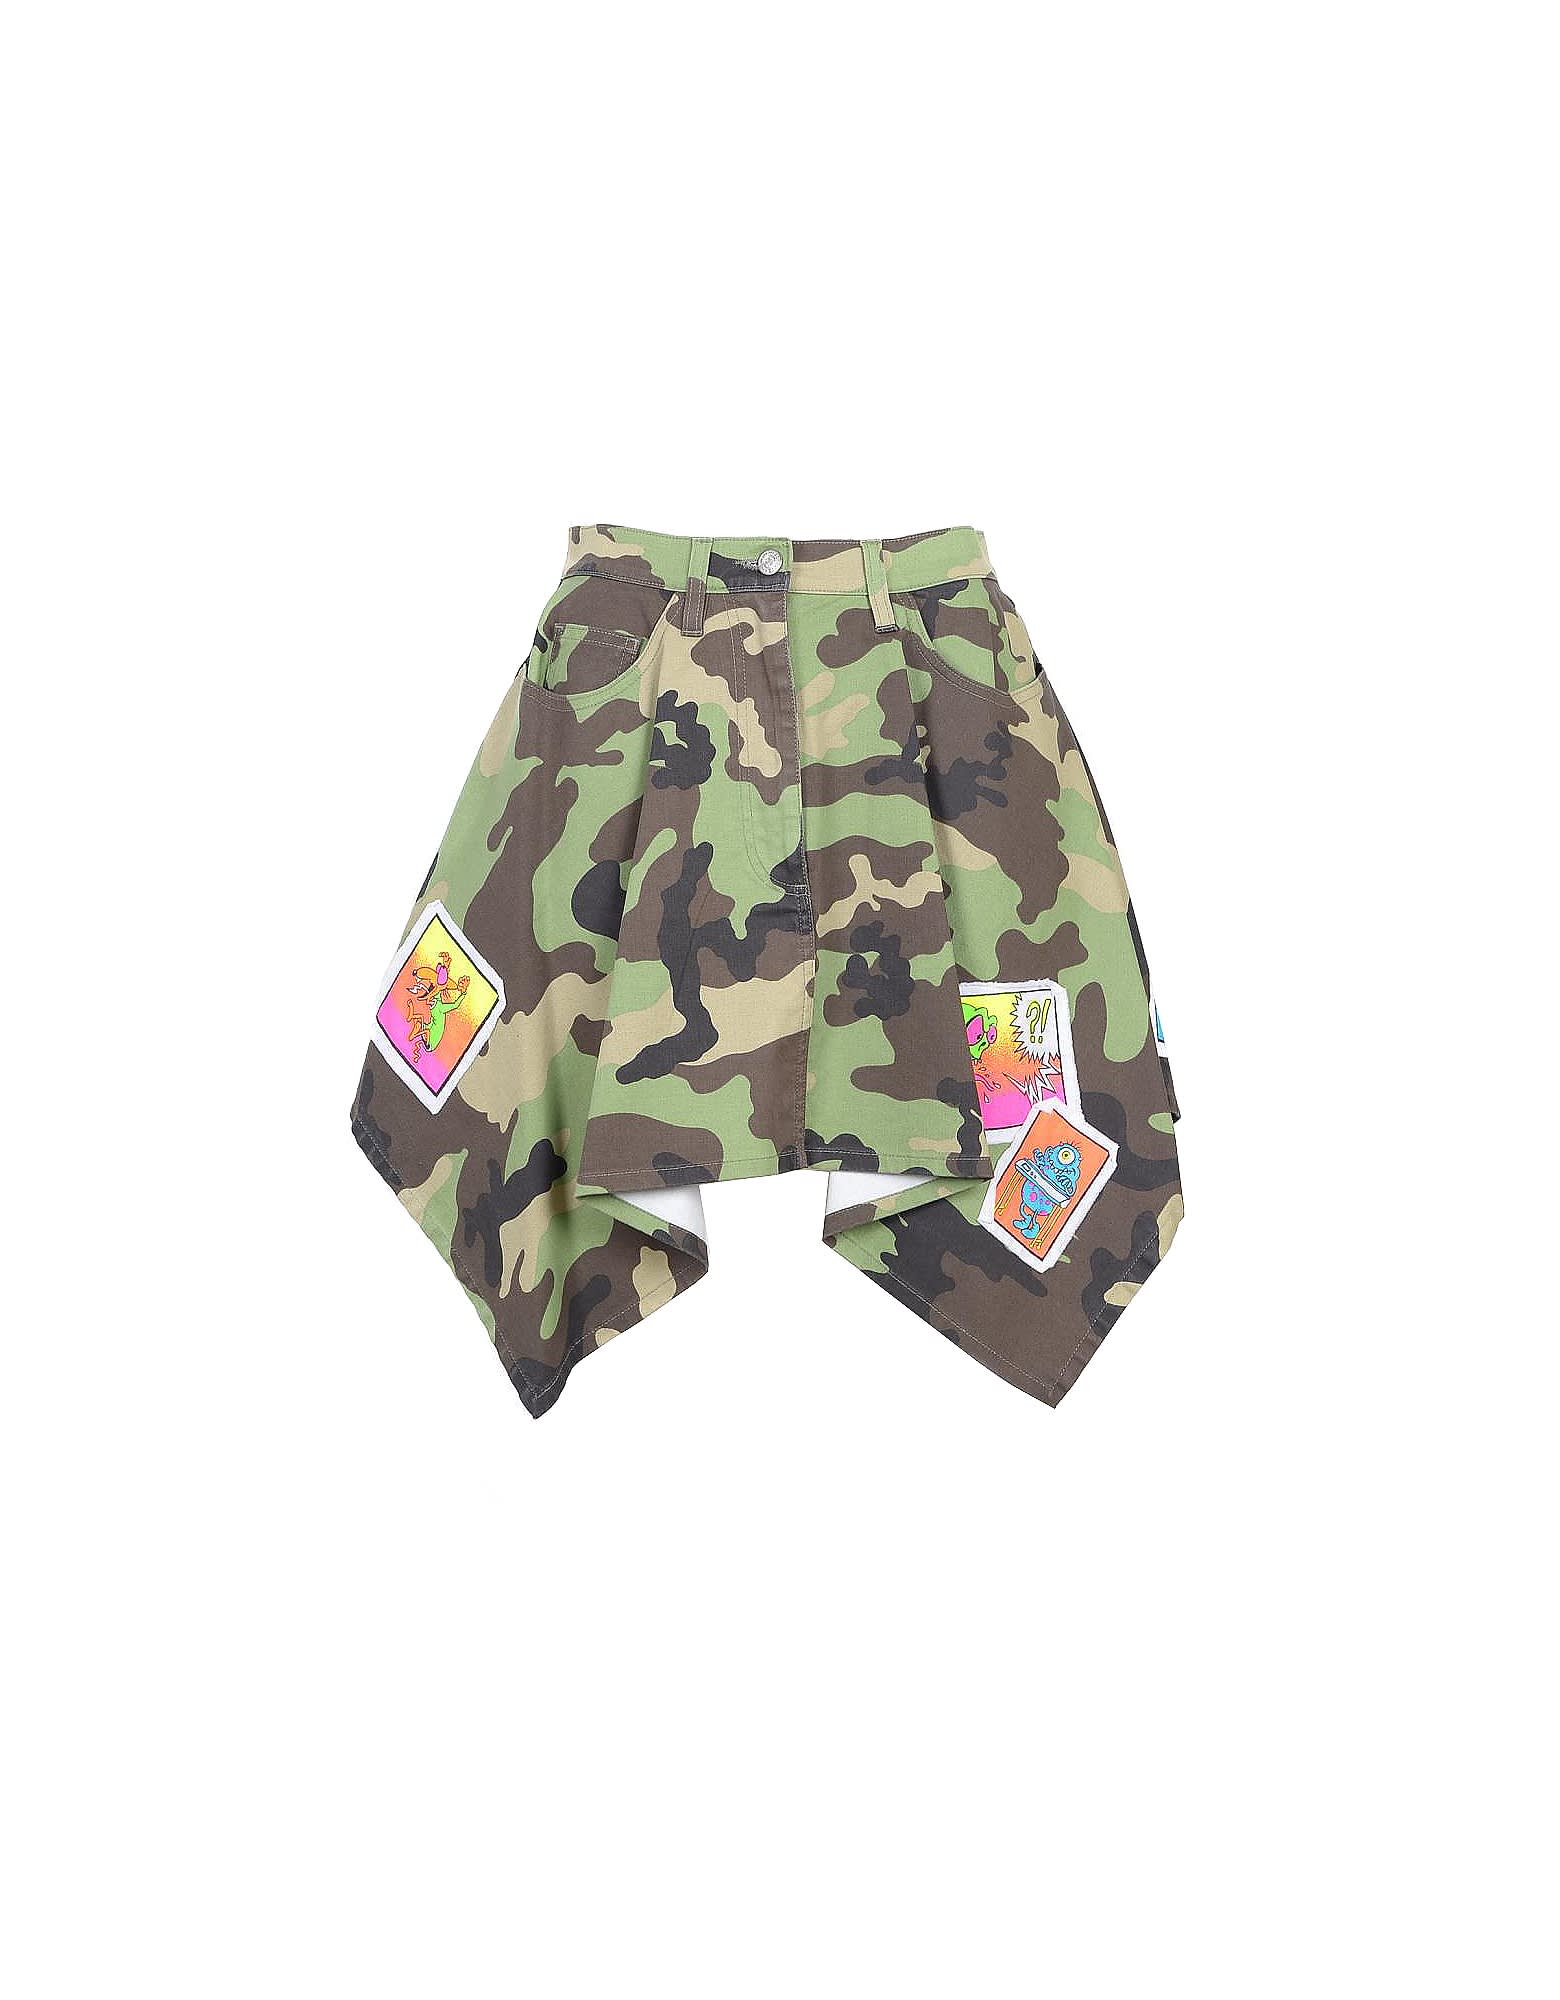 Jeremy Scott Womens Camouflage Skirt